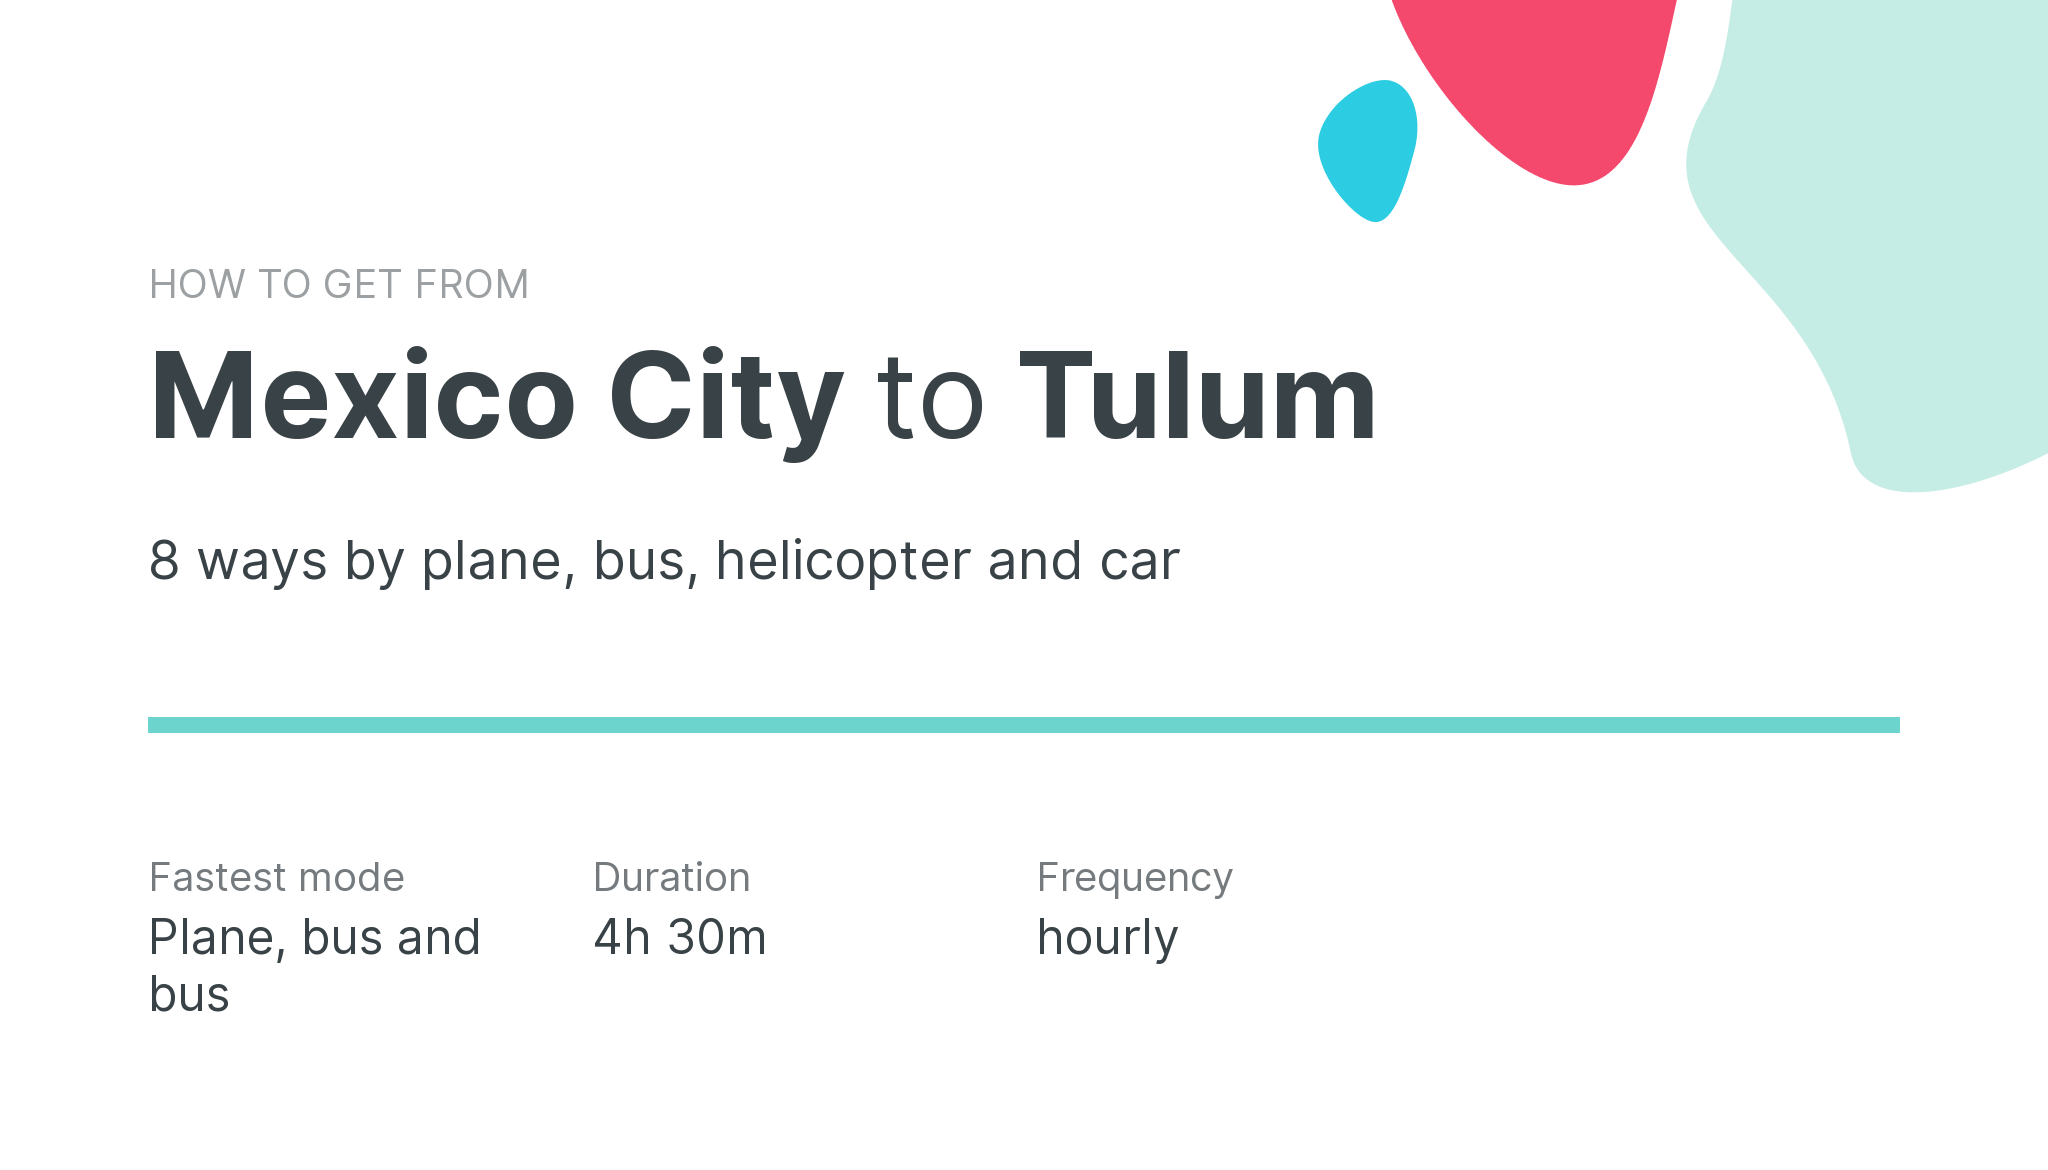 How do I get from Mexico City to Tulum